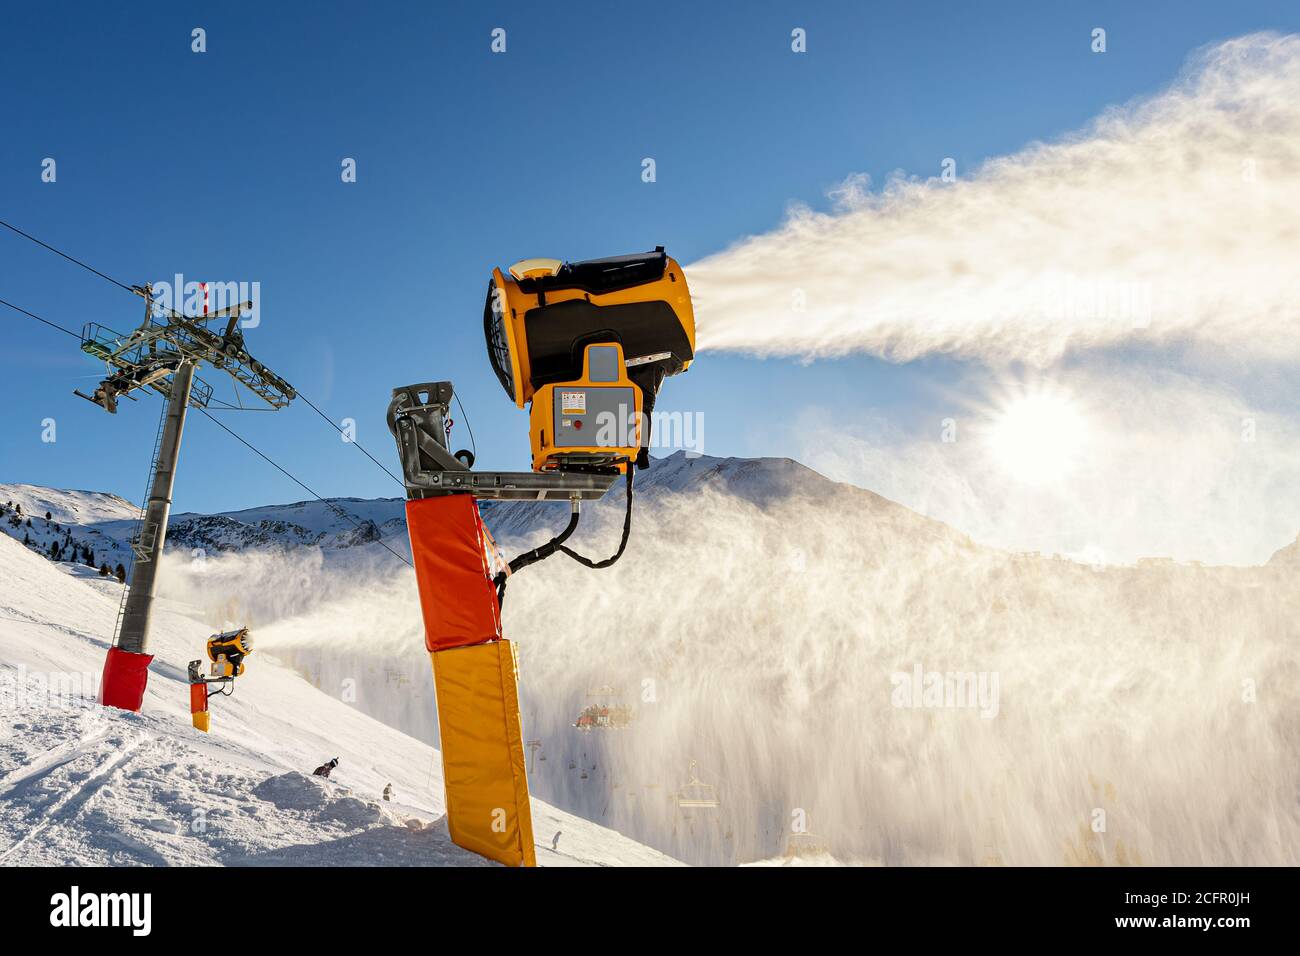 https://c8.alamy.com/comp/2CFR0JH/operating-artificial-snow-cannon-near-piste-making-snowy-powderski-lift-ropeway-on-hilghland-alpine-mountain-winter-resort-on-bright-sunny-day-2CFR0JH.jpg